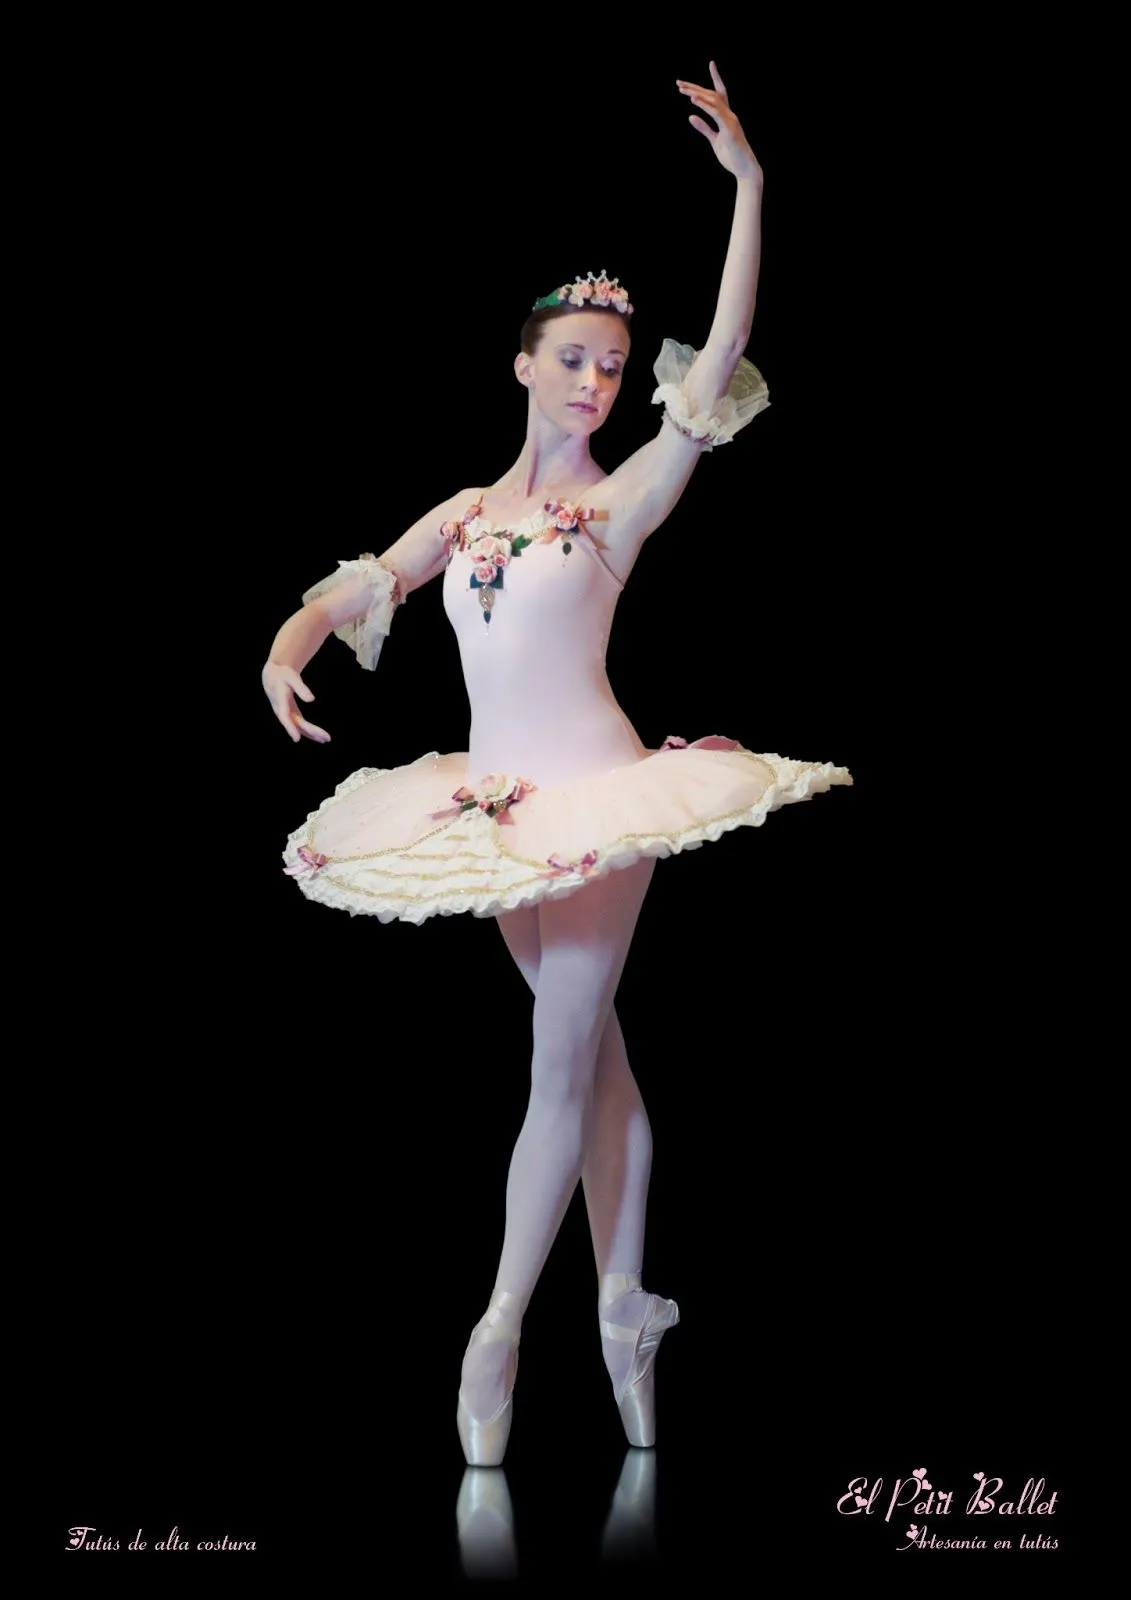 El Petit Ballet: FERIA DE DANZA EN BARCELONA